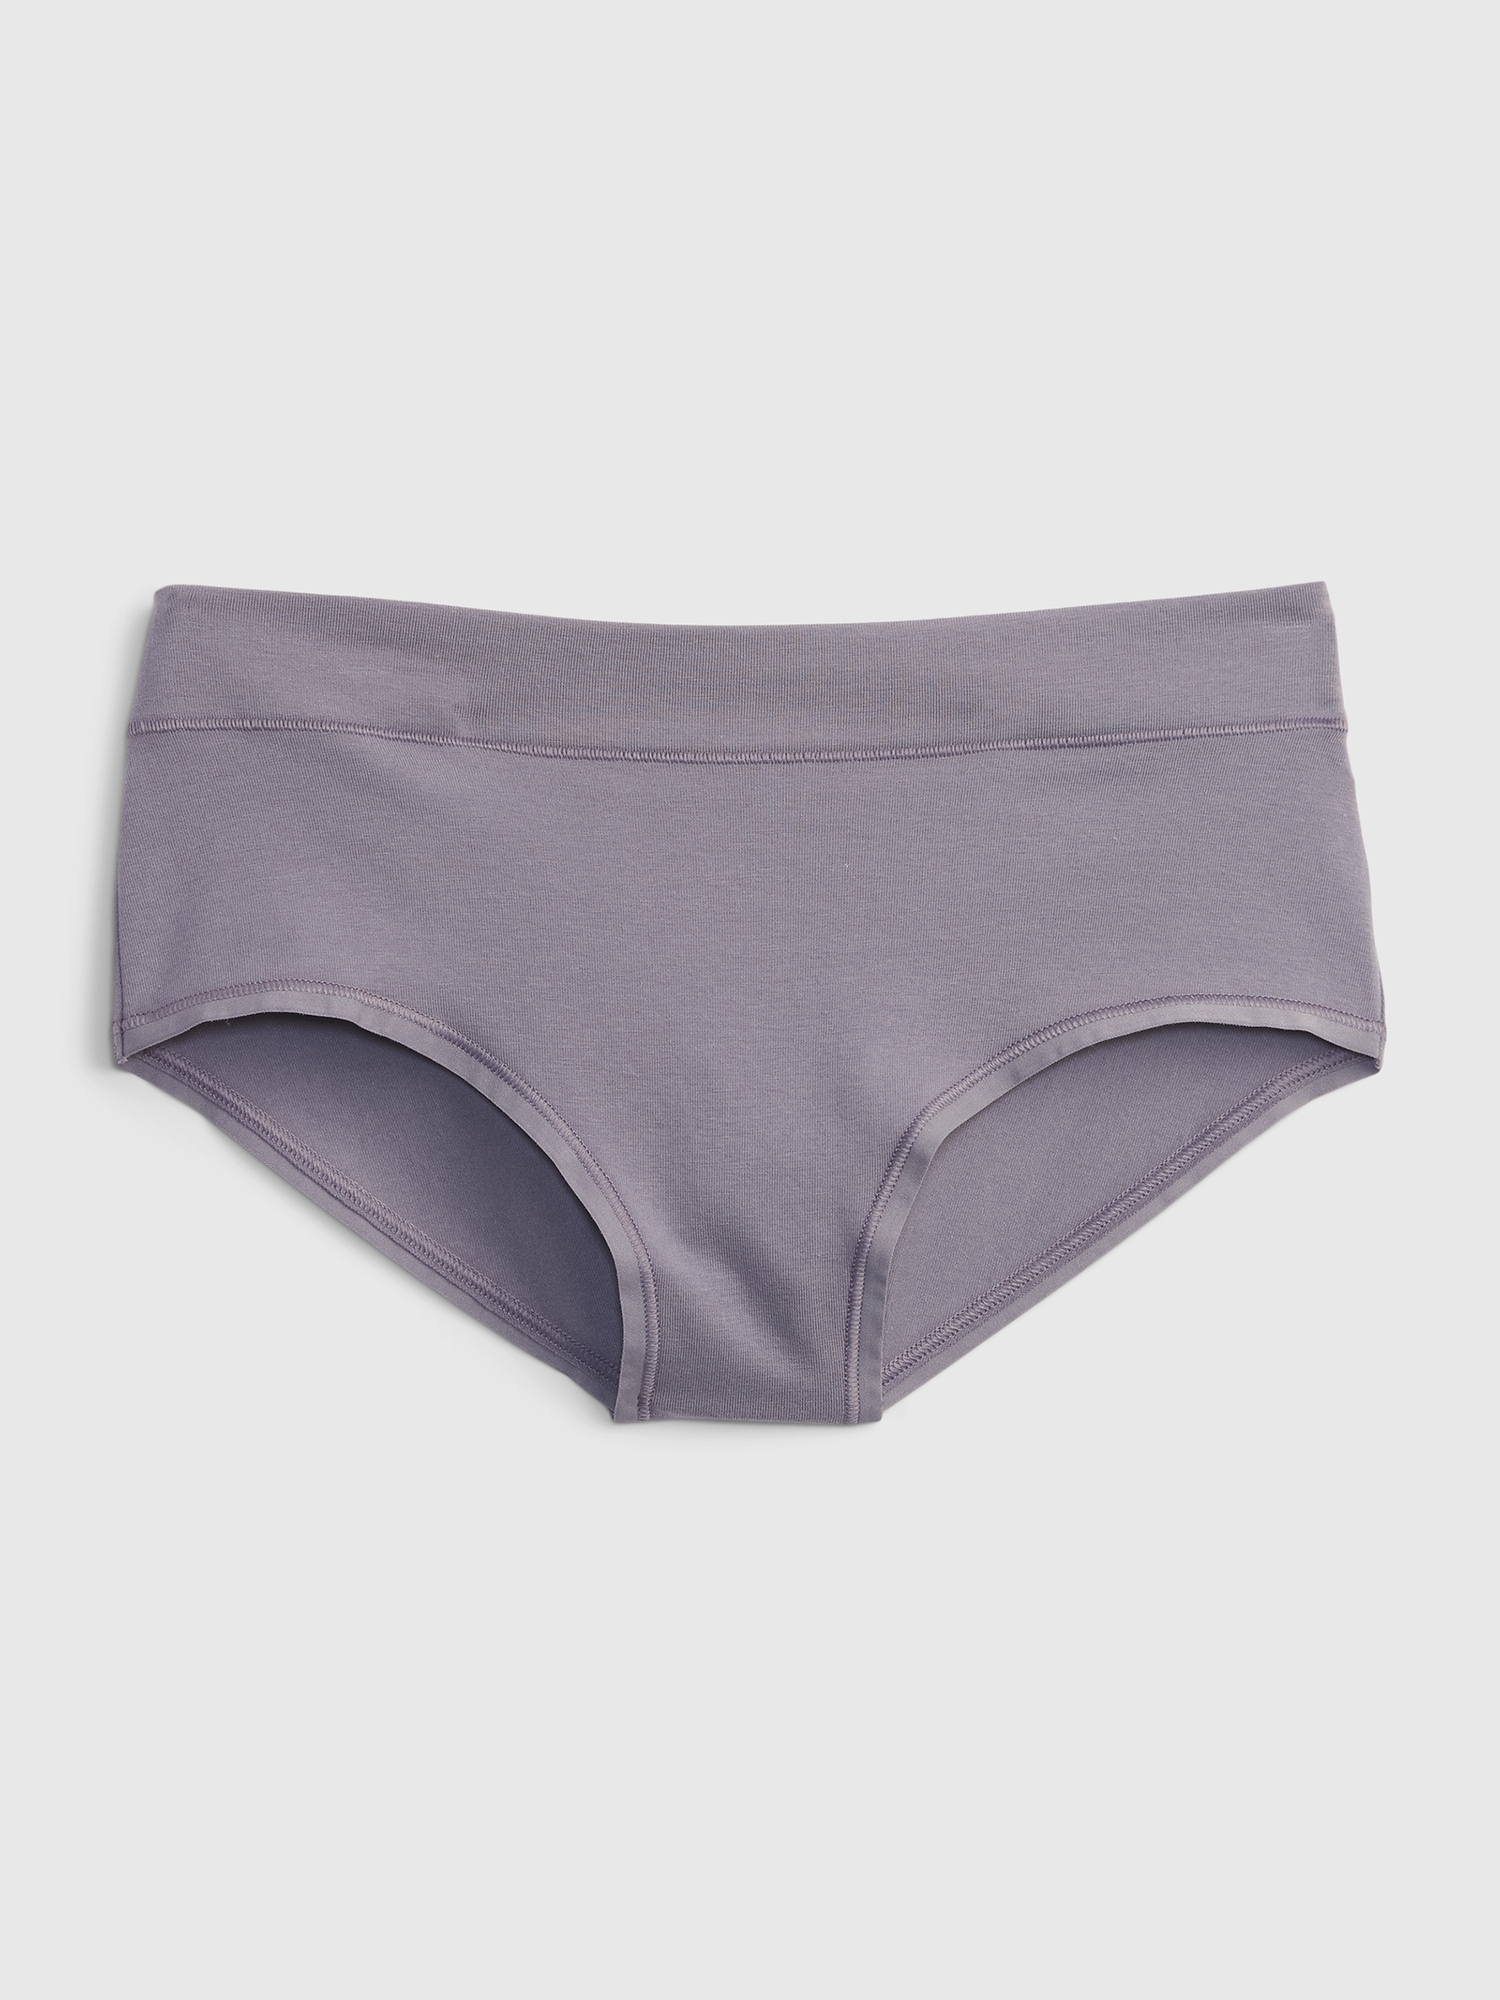 Hipster Cotton Neon Plain Women Underwear at Rs 25/piece in New